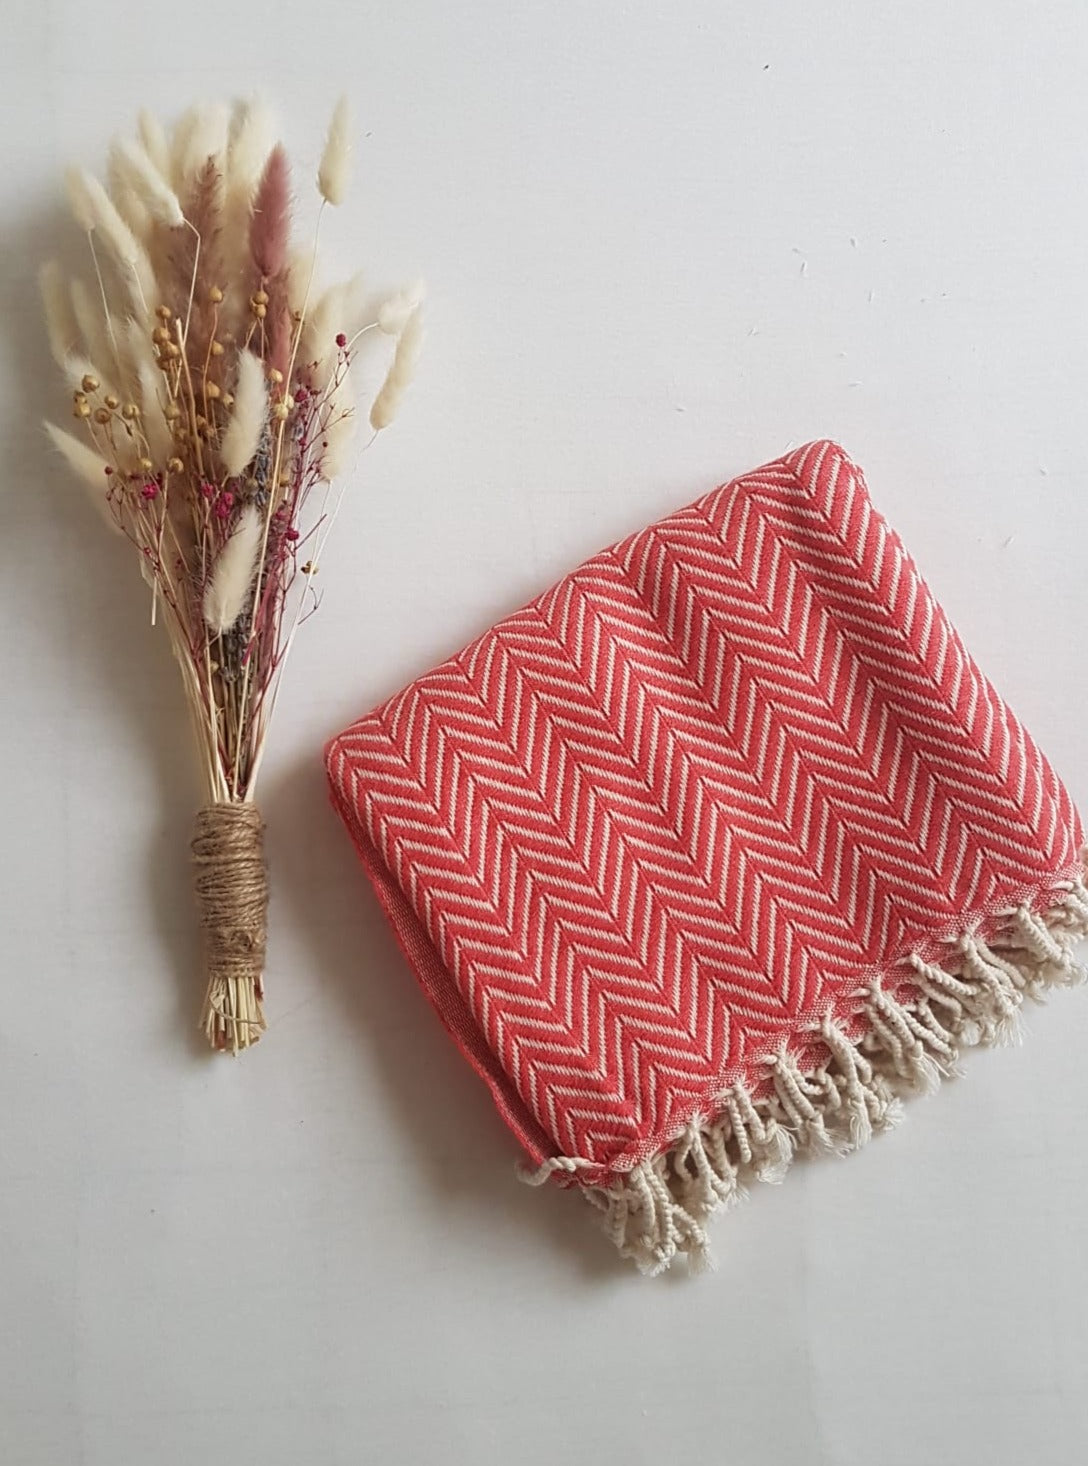 el patito towels and bathrobes 100% cotton towels natural cotton turkish shawls wraps scarves coral